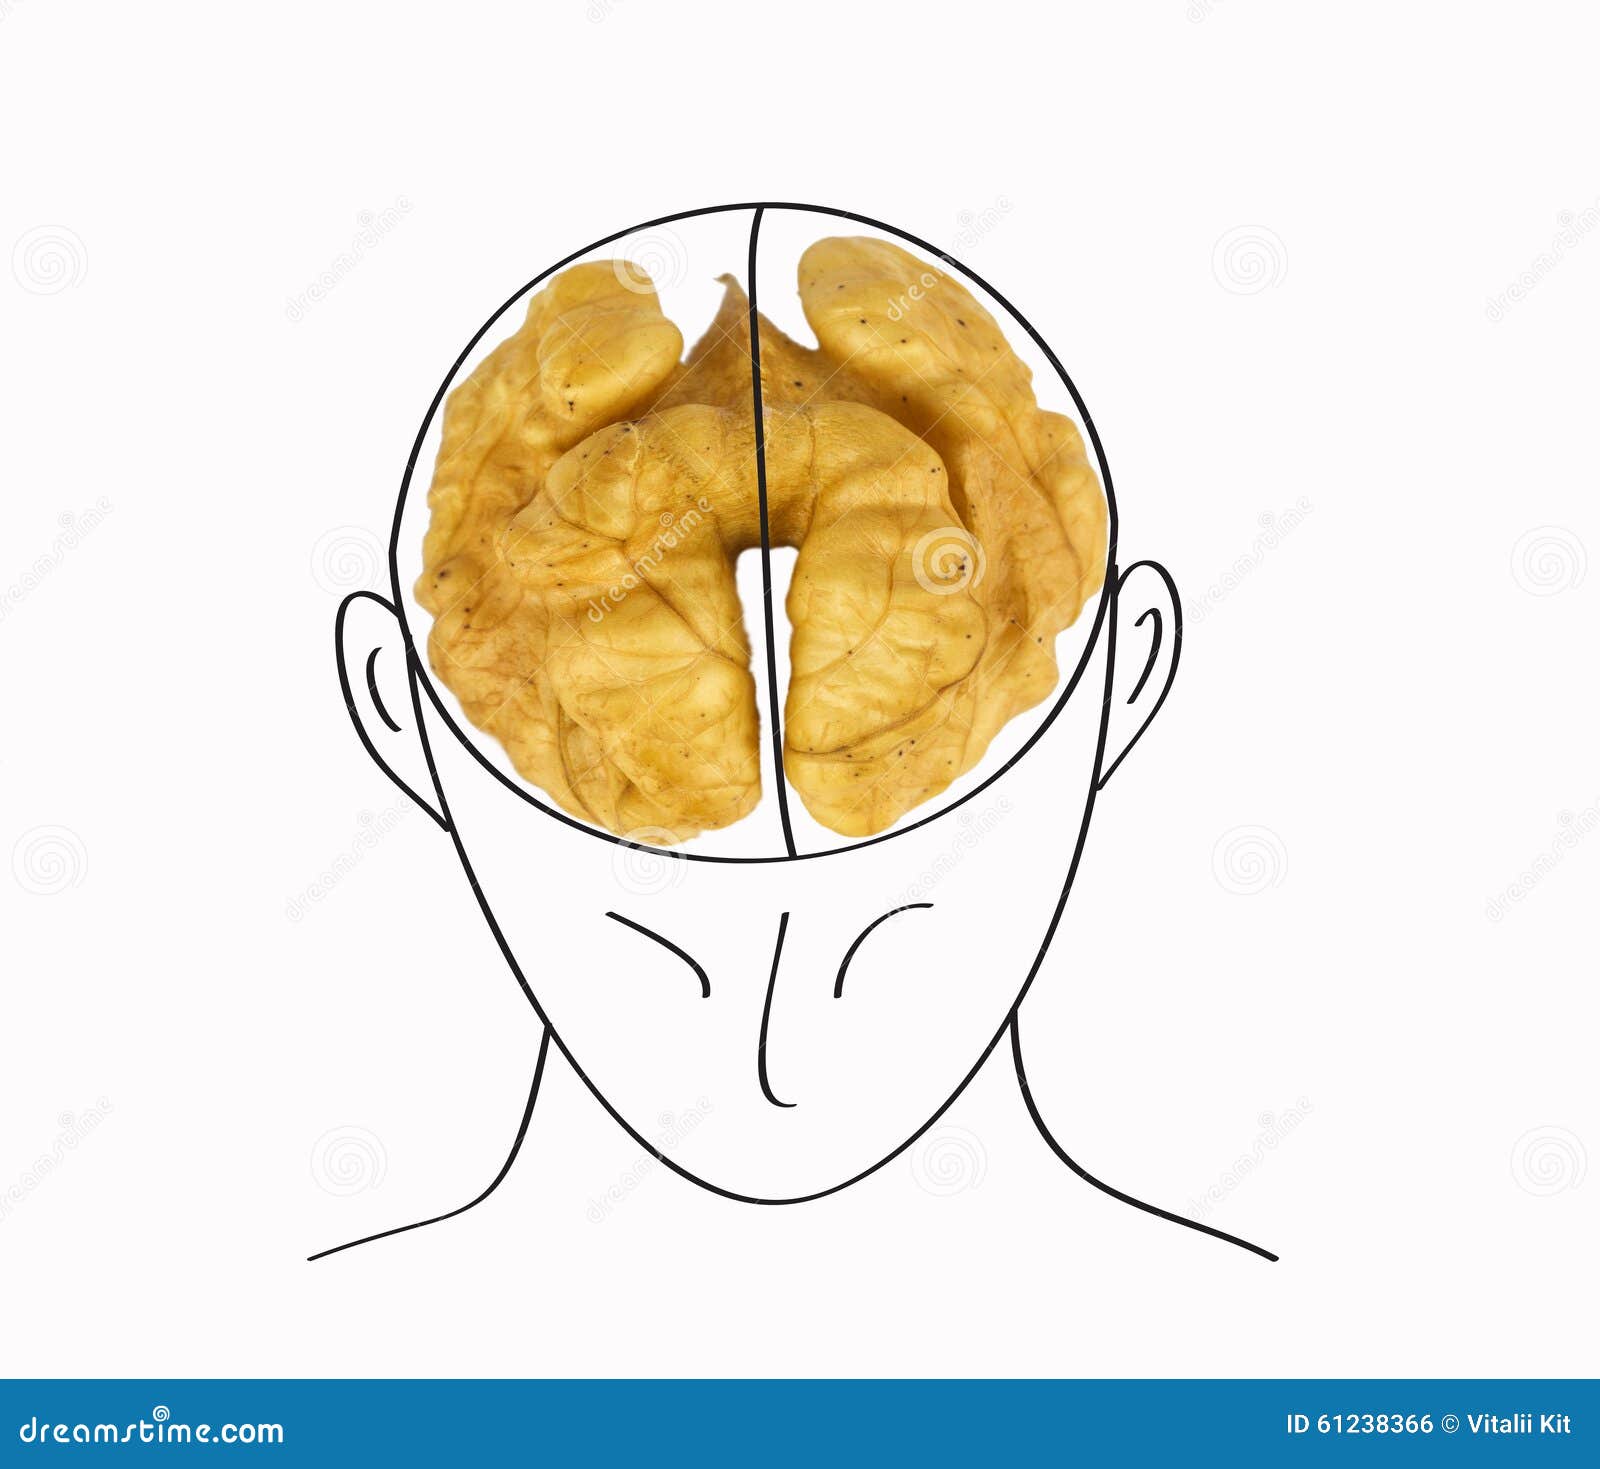 Грецкие орехи похожи на мозги. Грецкий орех и мозг. Орешек вместо мозга. Грецкий орех и мозг человека. Грецкий орех вместо мозга.